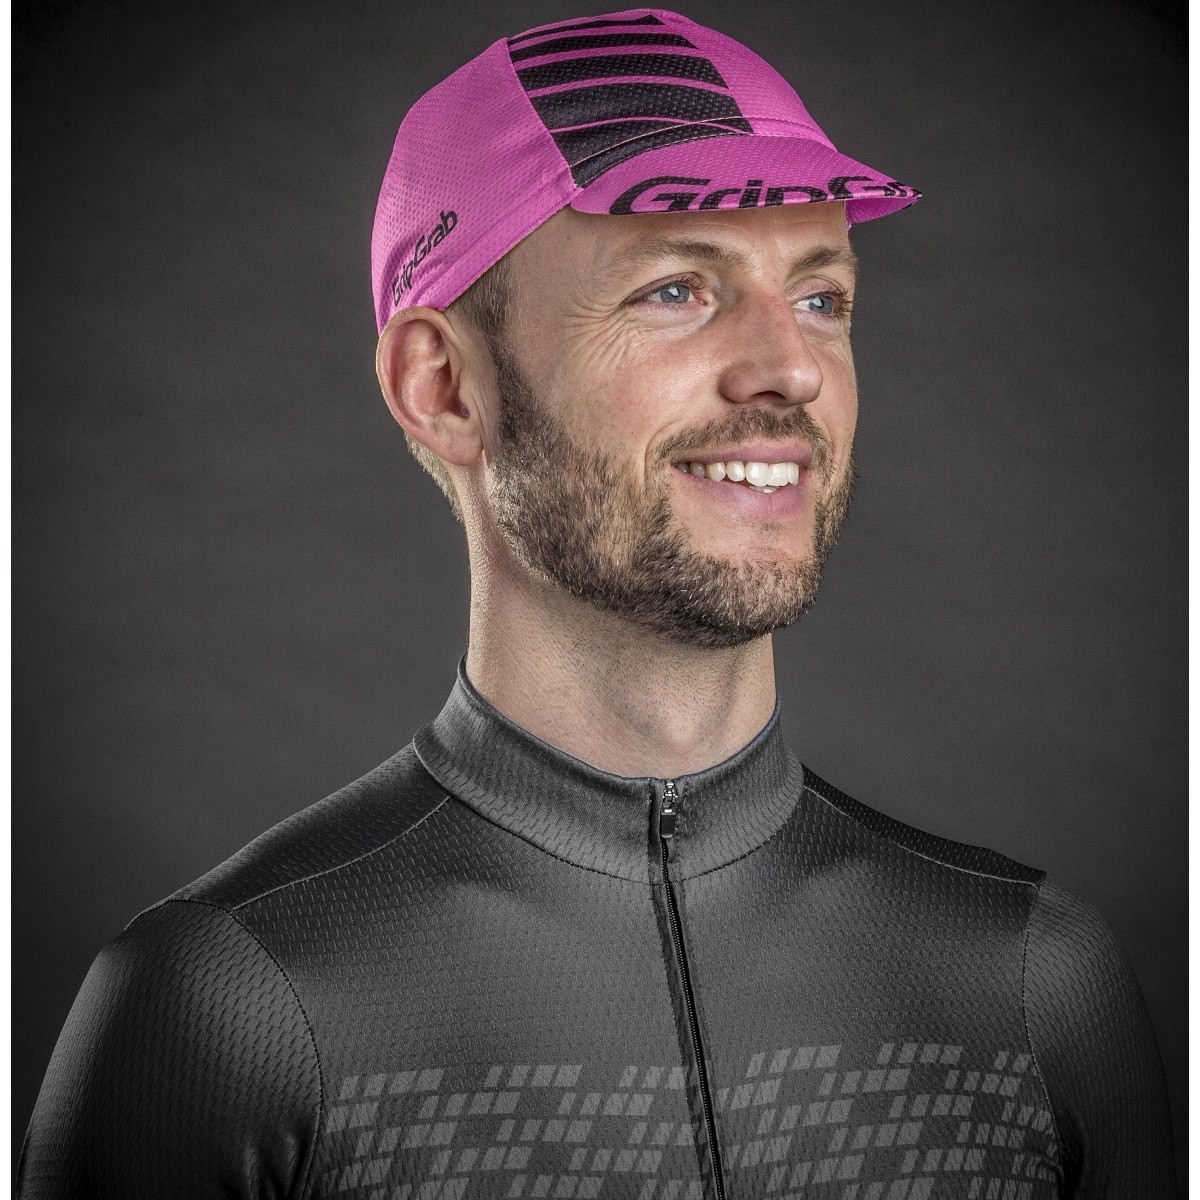 GRIPGRAB Lightweight Summer Cycling Cap cepure - pink/black